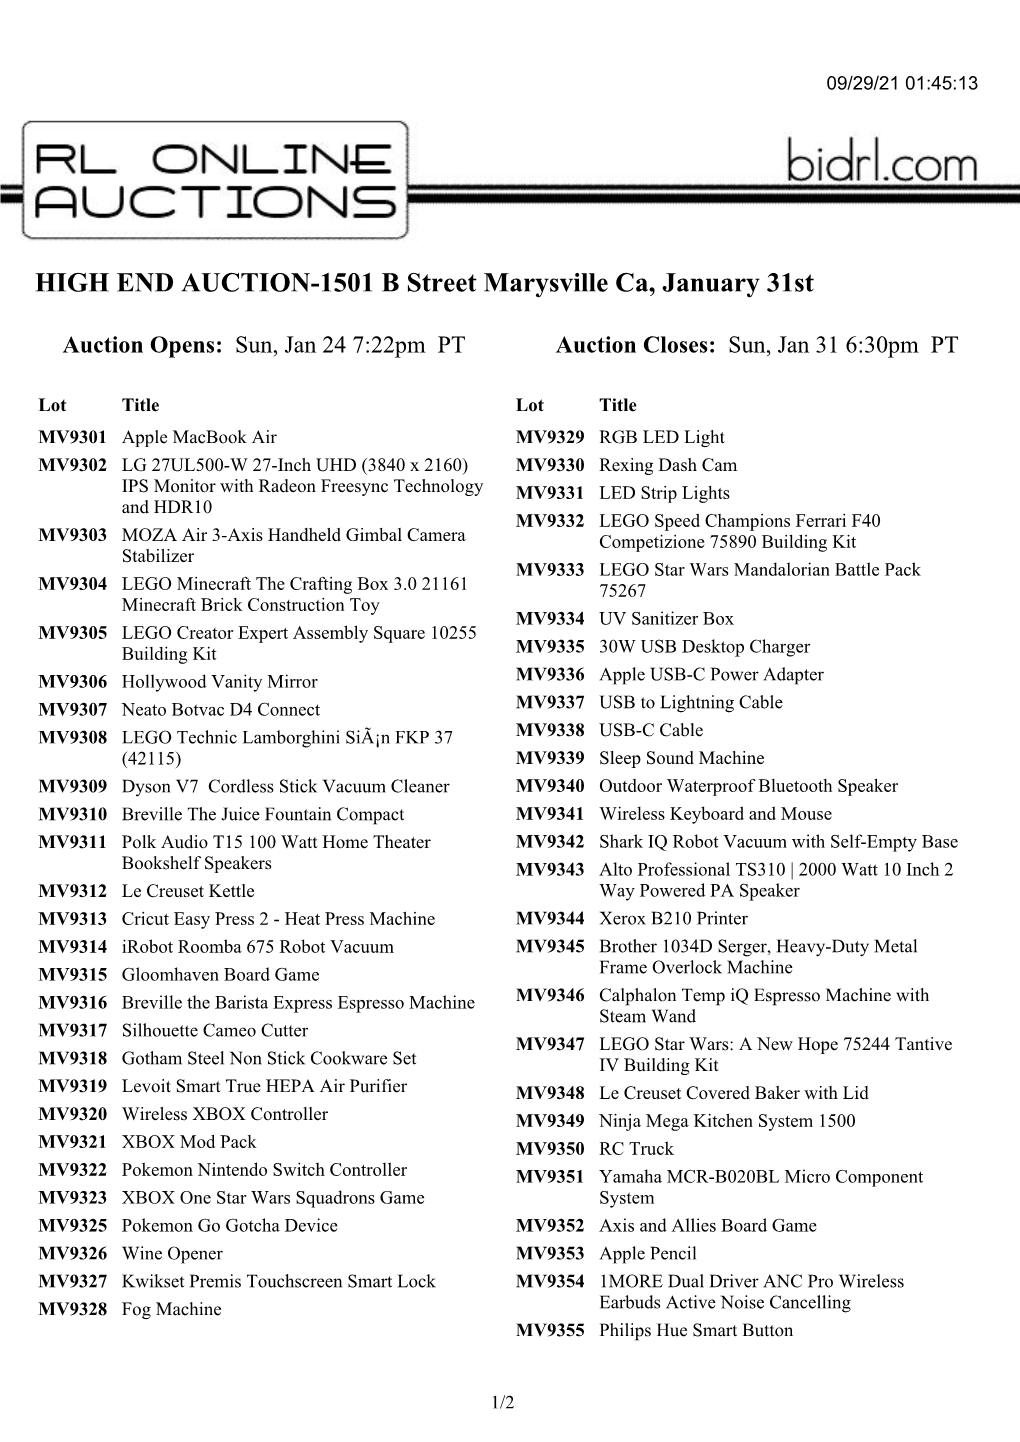 HIGH END AUCTION-1501 B Street Marysville Ca, January 31St